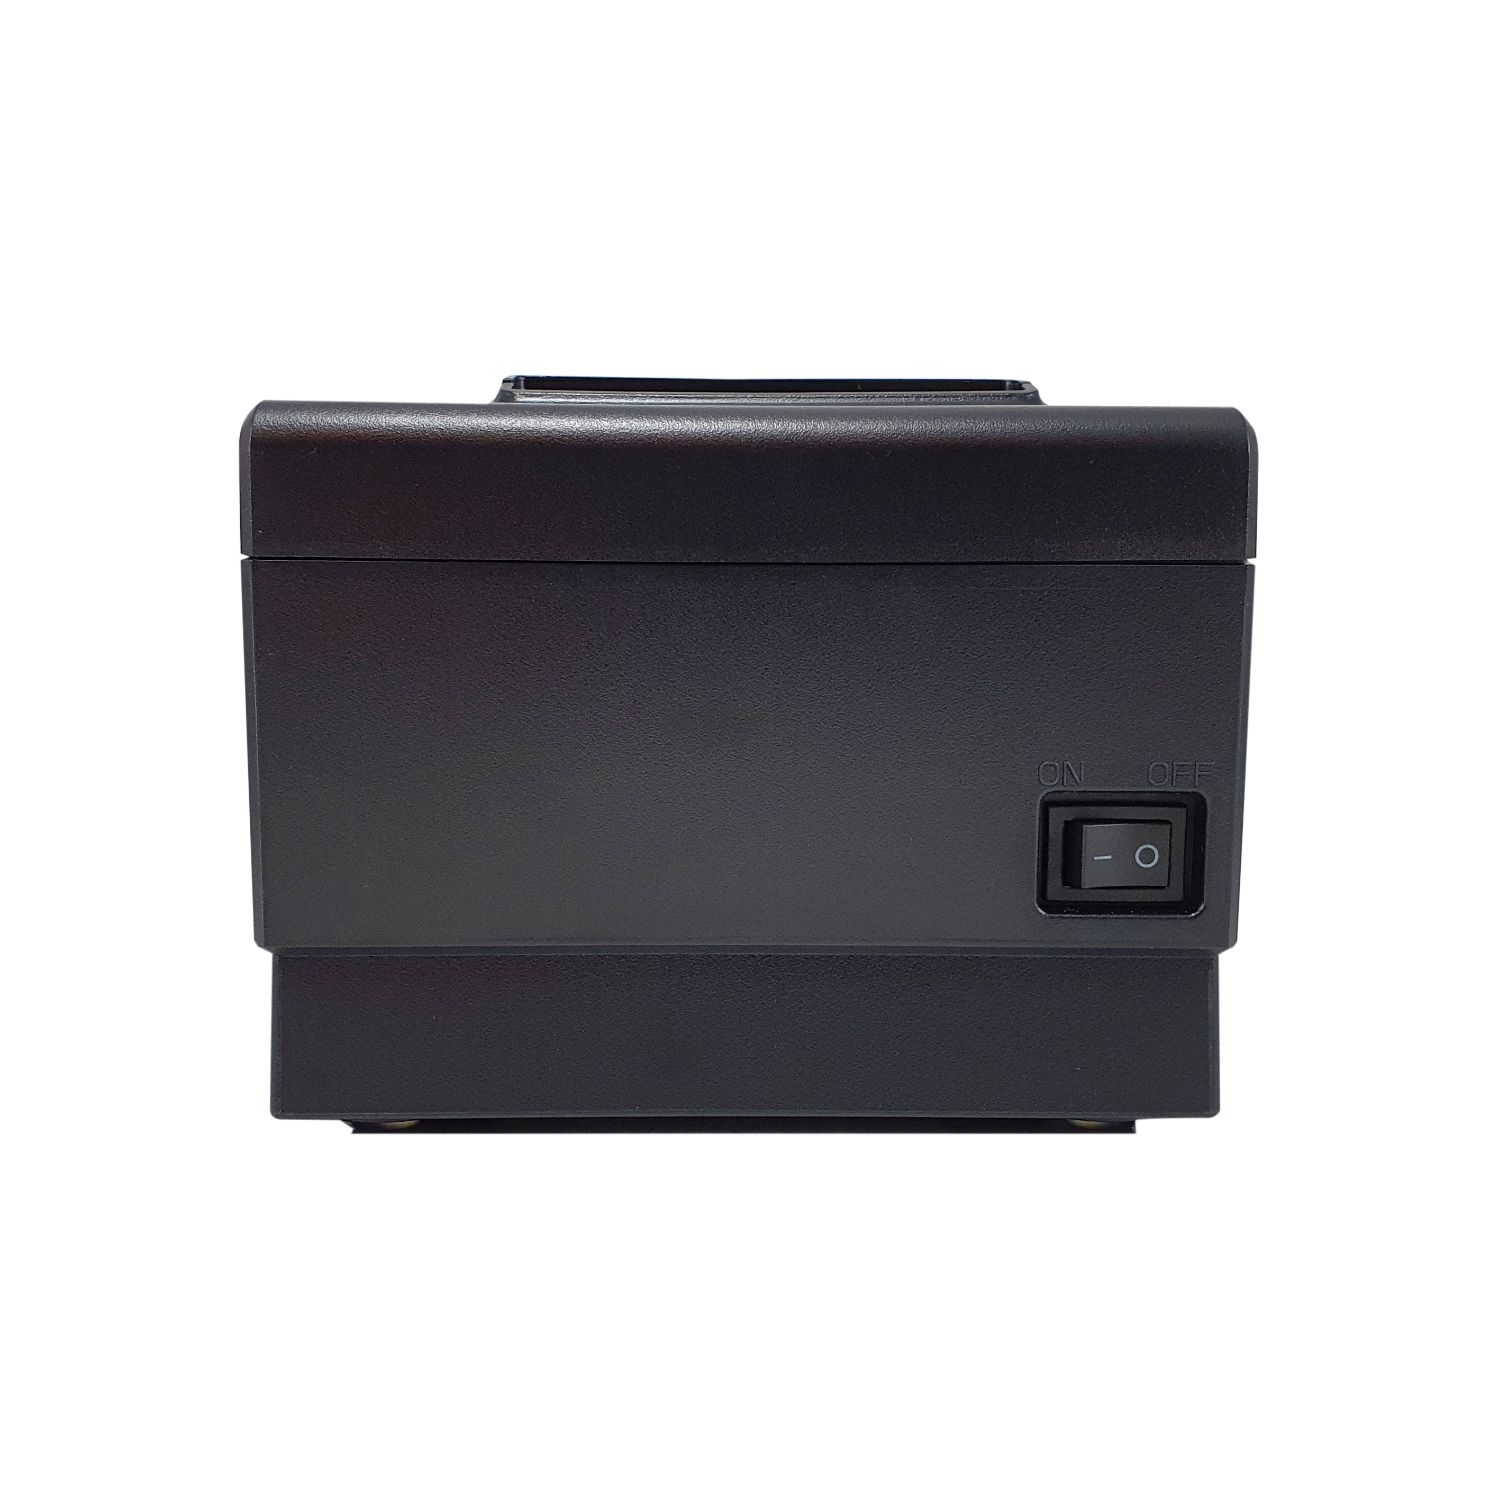 EQ351004 - Impresora Trmica EQUIP 80mm 203x203dpi USB-B 2.0 RJ11 WiFi Bluetooth Corte Manual/Automtico Negra (EQ351004)